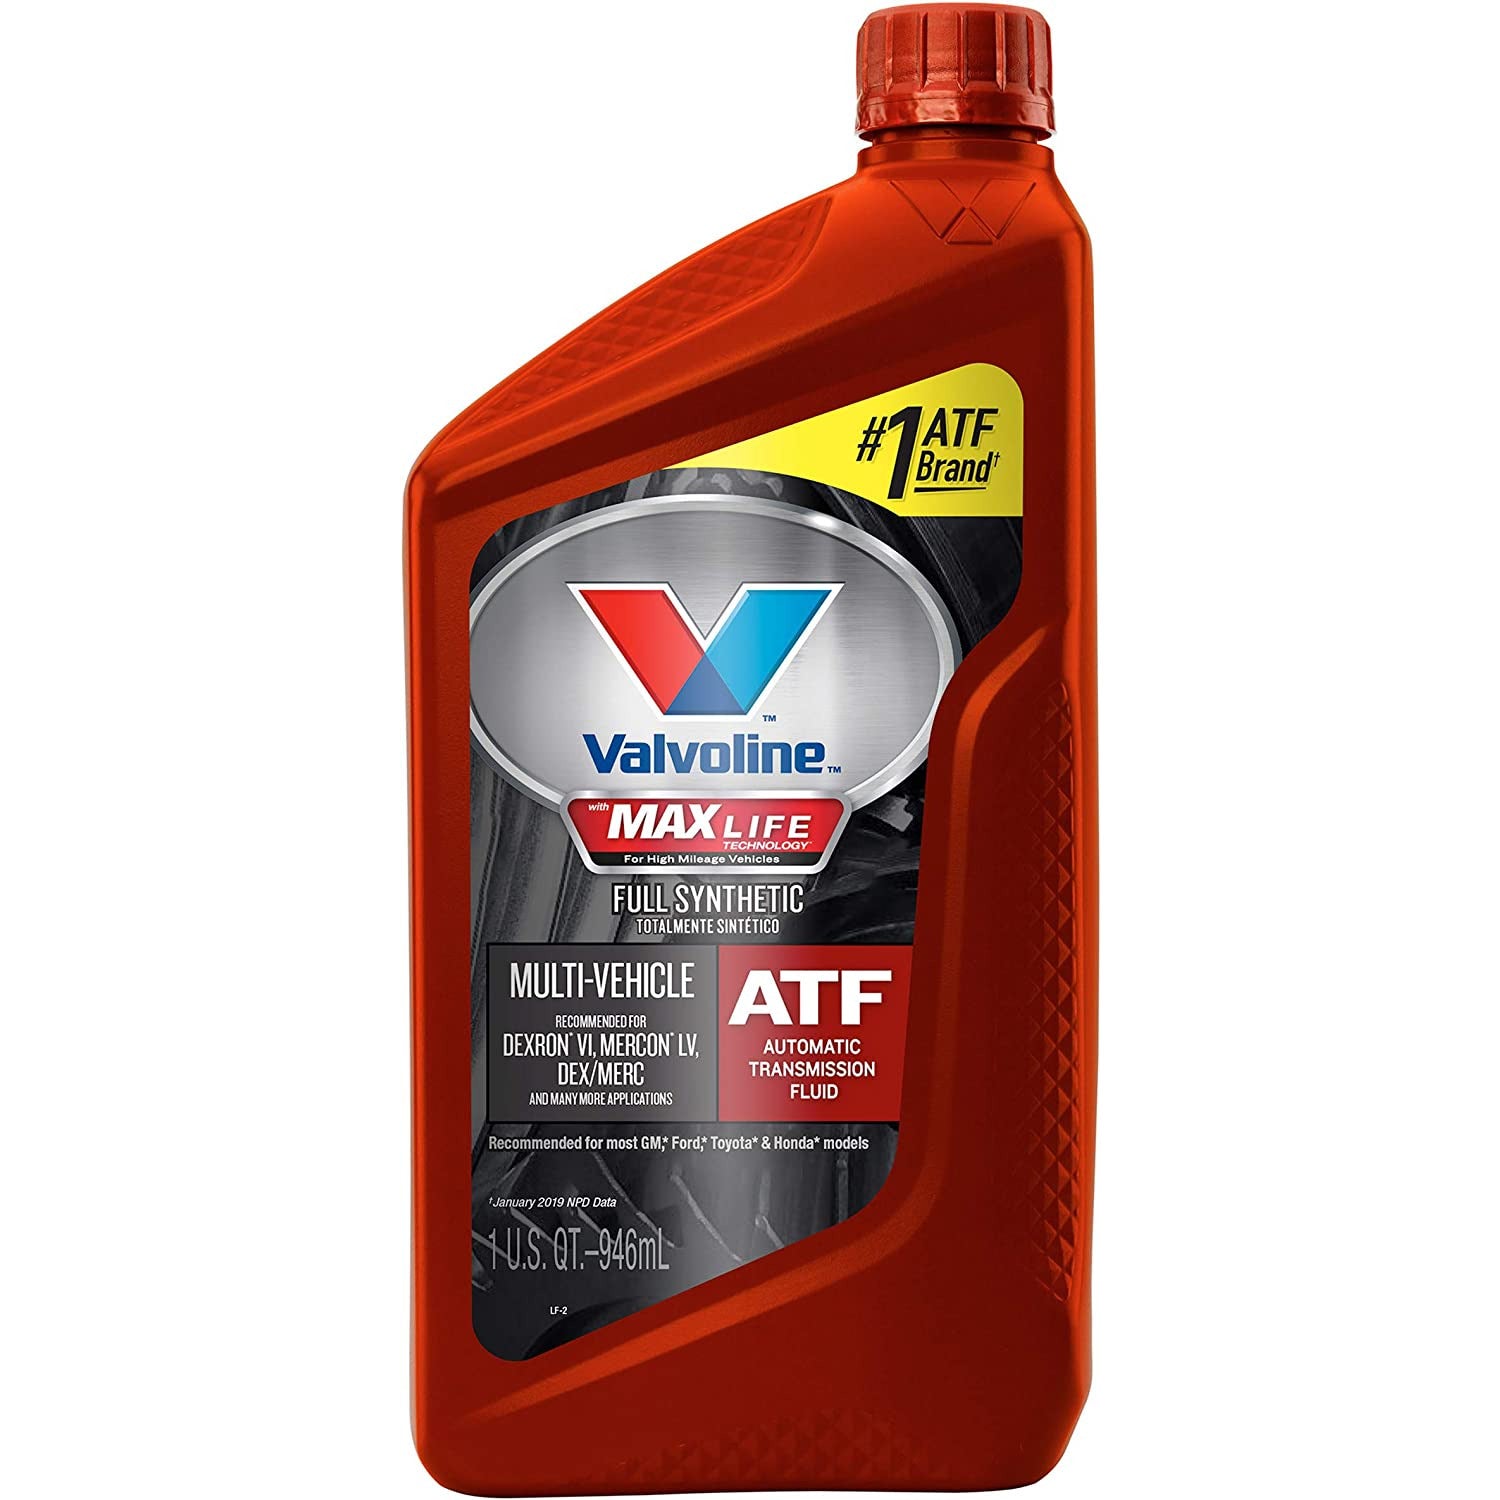 VAL VV324 | Valvoline MaxLife Full Synthetic Multi-Vehicle Automatic Transmission Fluid (ATF) : 1 QT